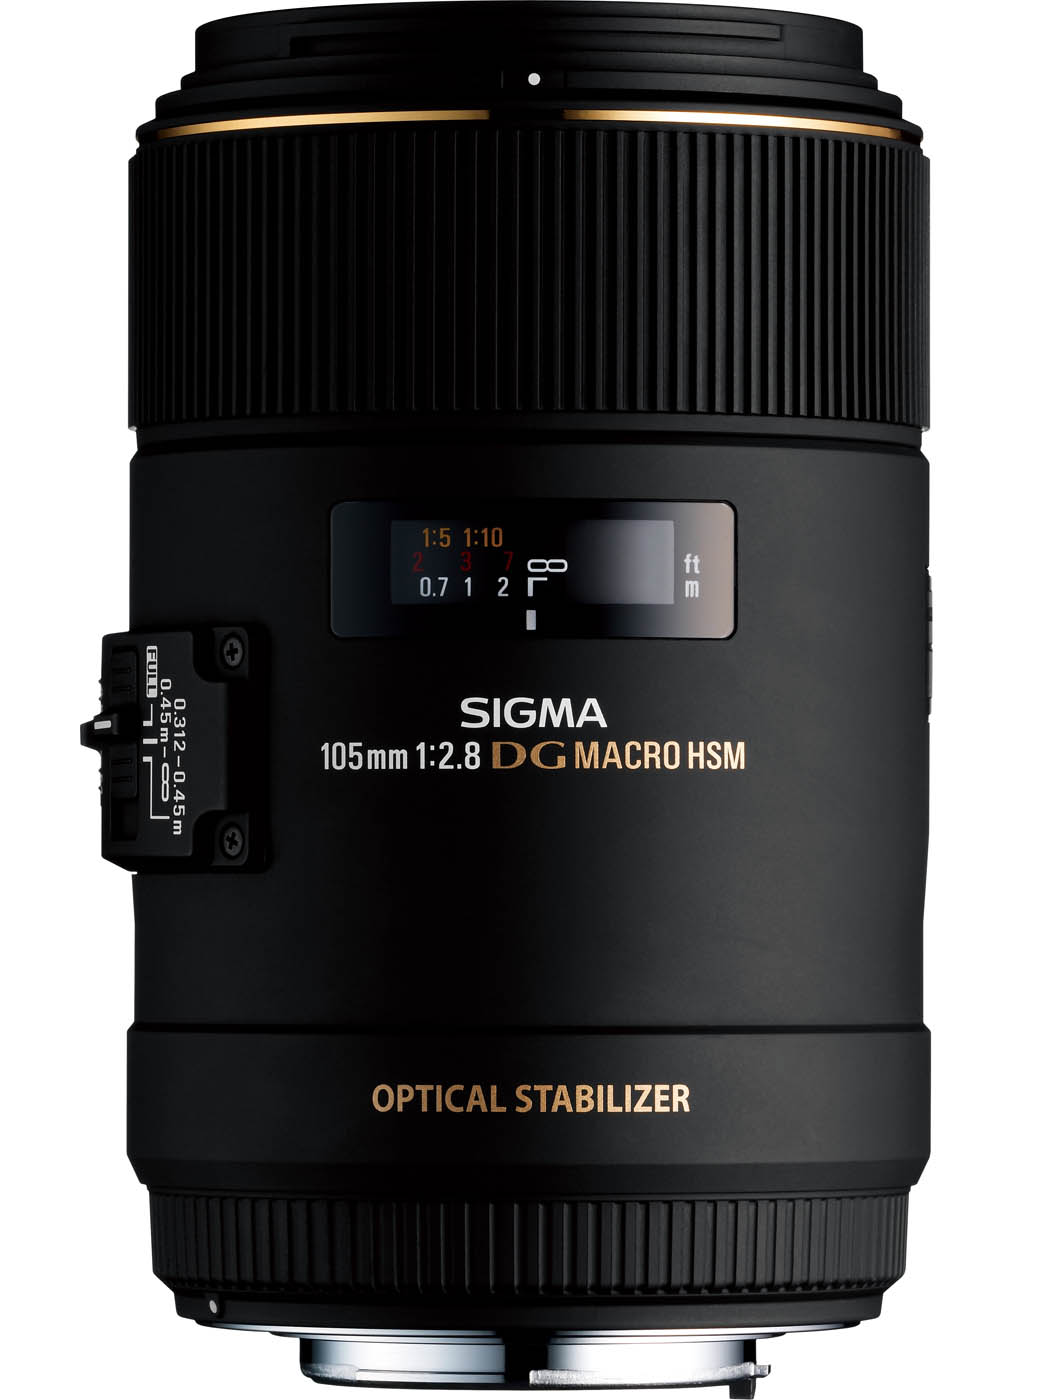 Sigma 105mm 2.8. Sigma af 105mm f/2.8 macro. Sigma 105mm f2.8 ex DG os HSM macro. Sigma af 105mm f/2.8 ex DG os HSM macro Canon EF. Sigma 105 2.8 macro.